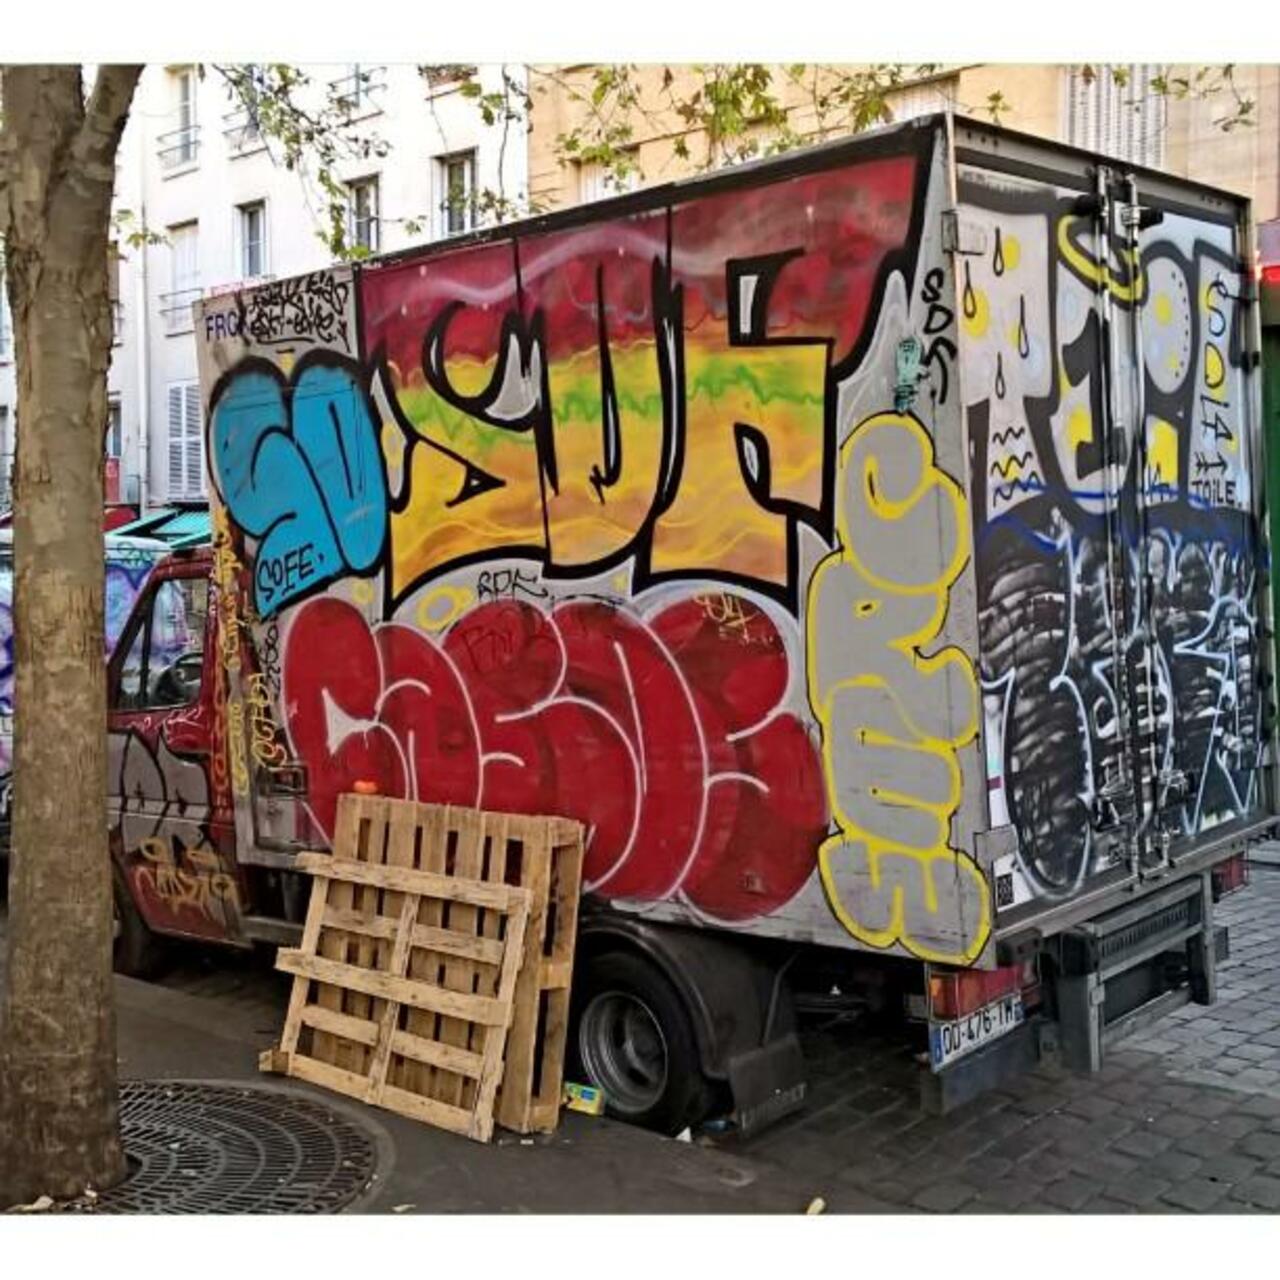 http://ift.tt/1KiqpQt #Paris #graffiti photo by maxdimontemarciano http://ift.tt/1hcBKHj #StreetArt https://t.co/NEYHd7hTcv